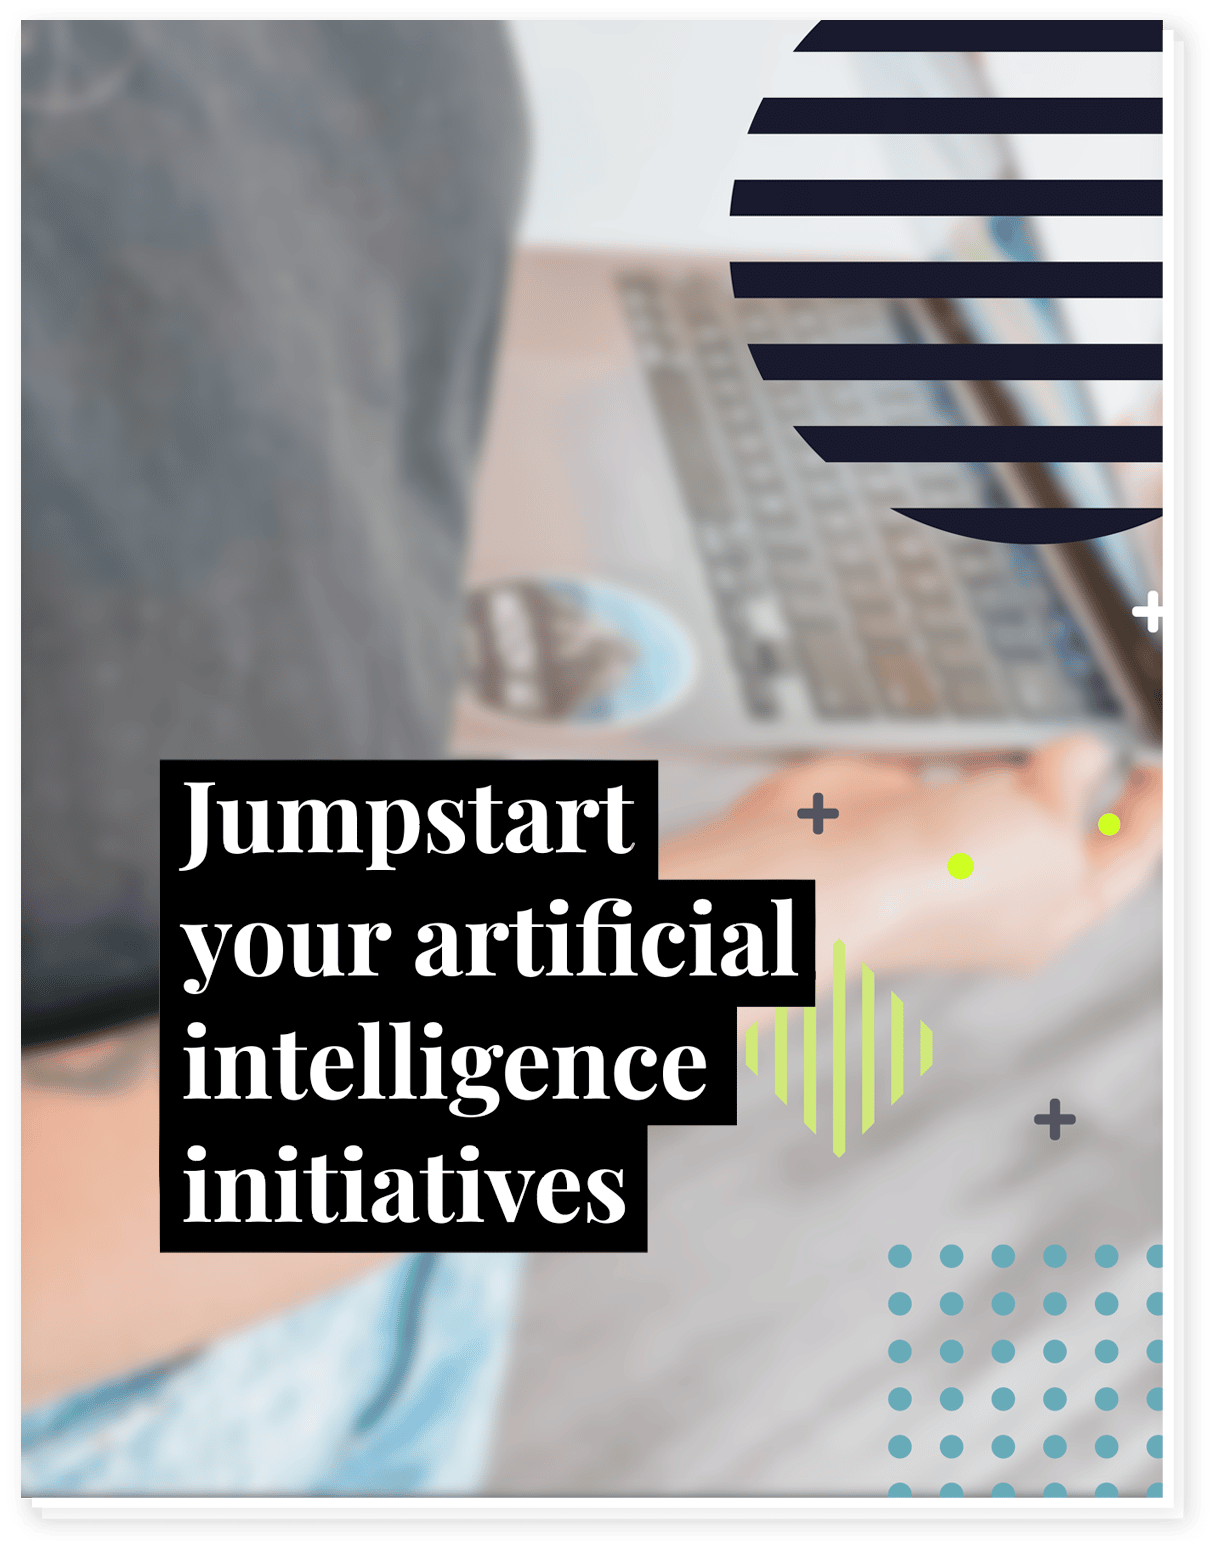 Jumpstart your artificial intelligence initiatives